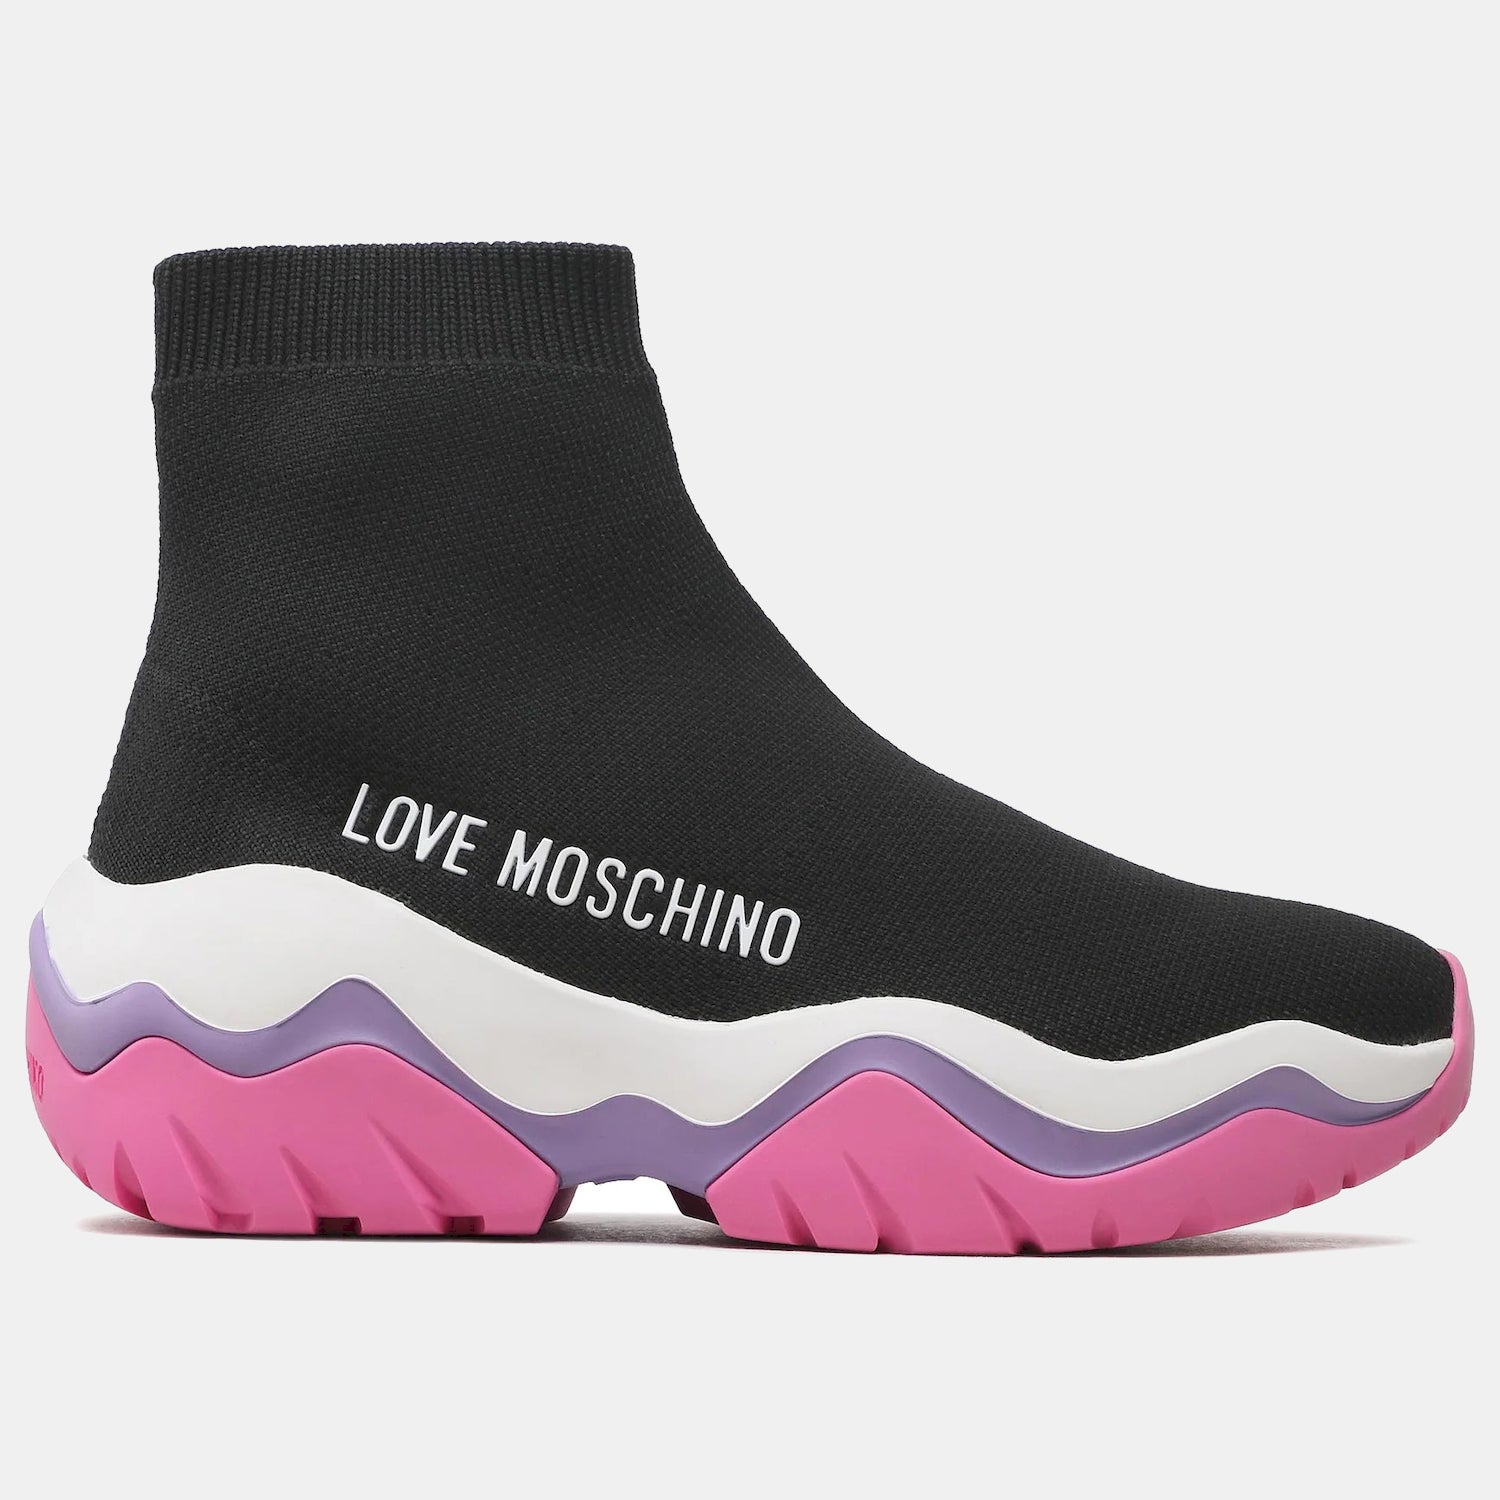 Moschino Botas Boots Ja15574 Black Pink Preto Rosa_shot1